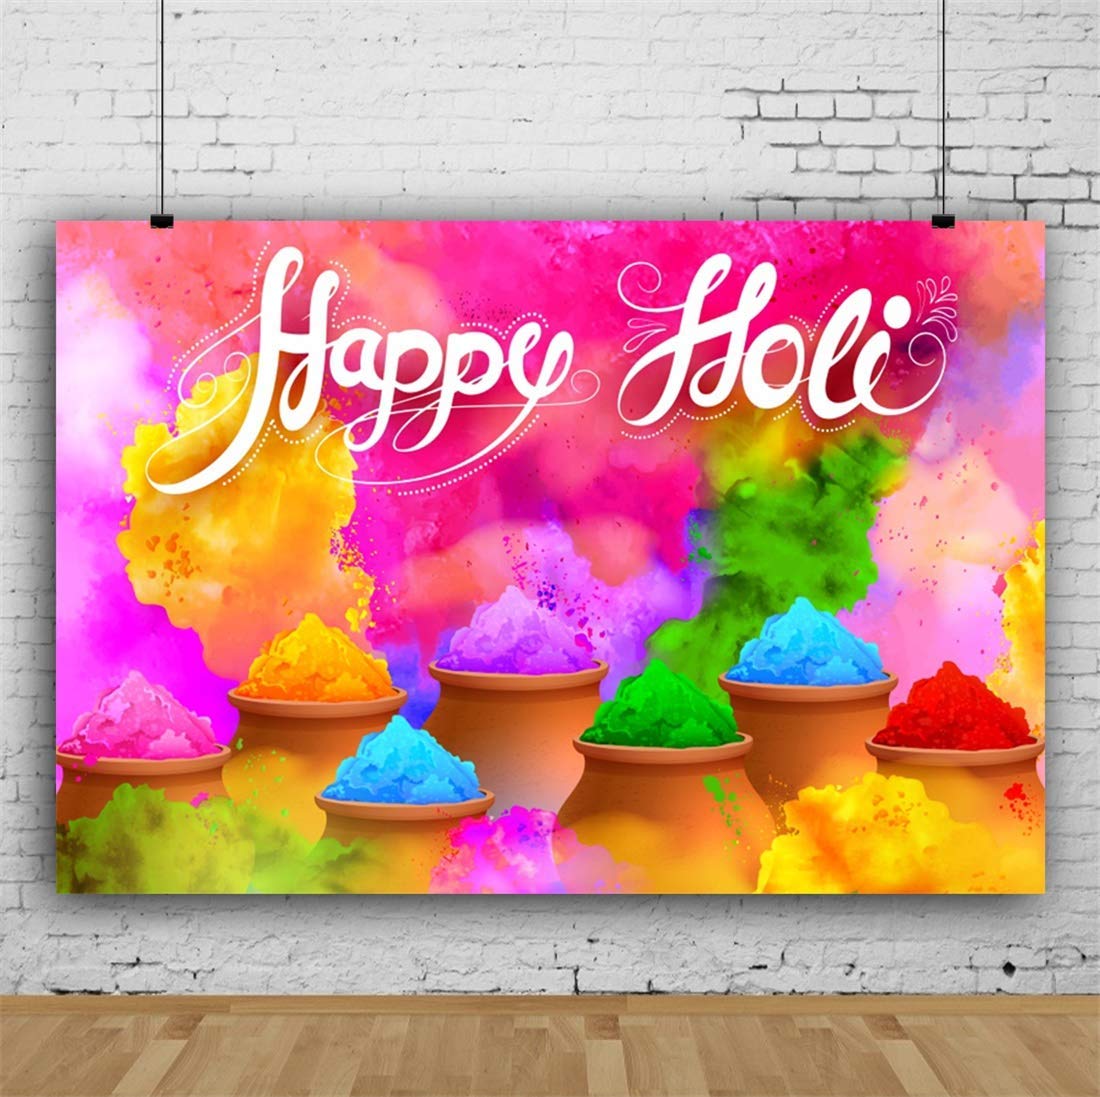 Happy Holi My Friends - HD Wallpaper 